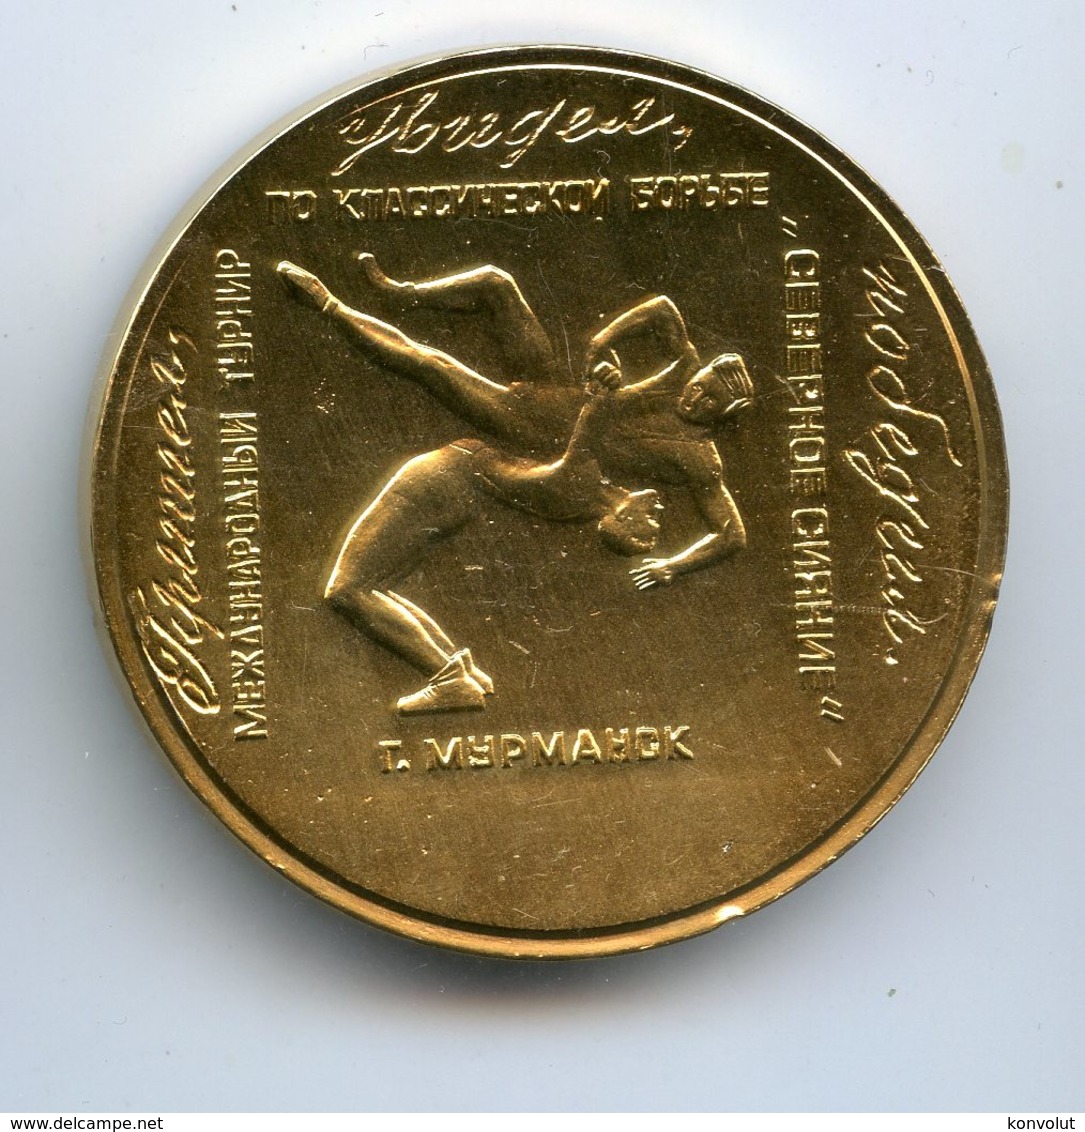 LUTTE RINGEN International Tournament Murmansk 1980 Wrestling Medaille Medal - Uniformes Recordatorios & Misc